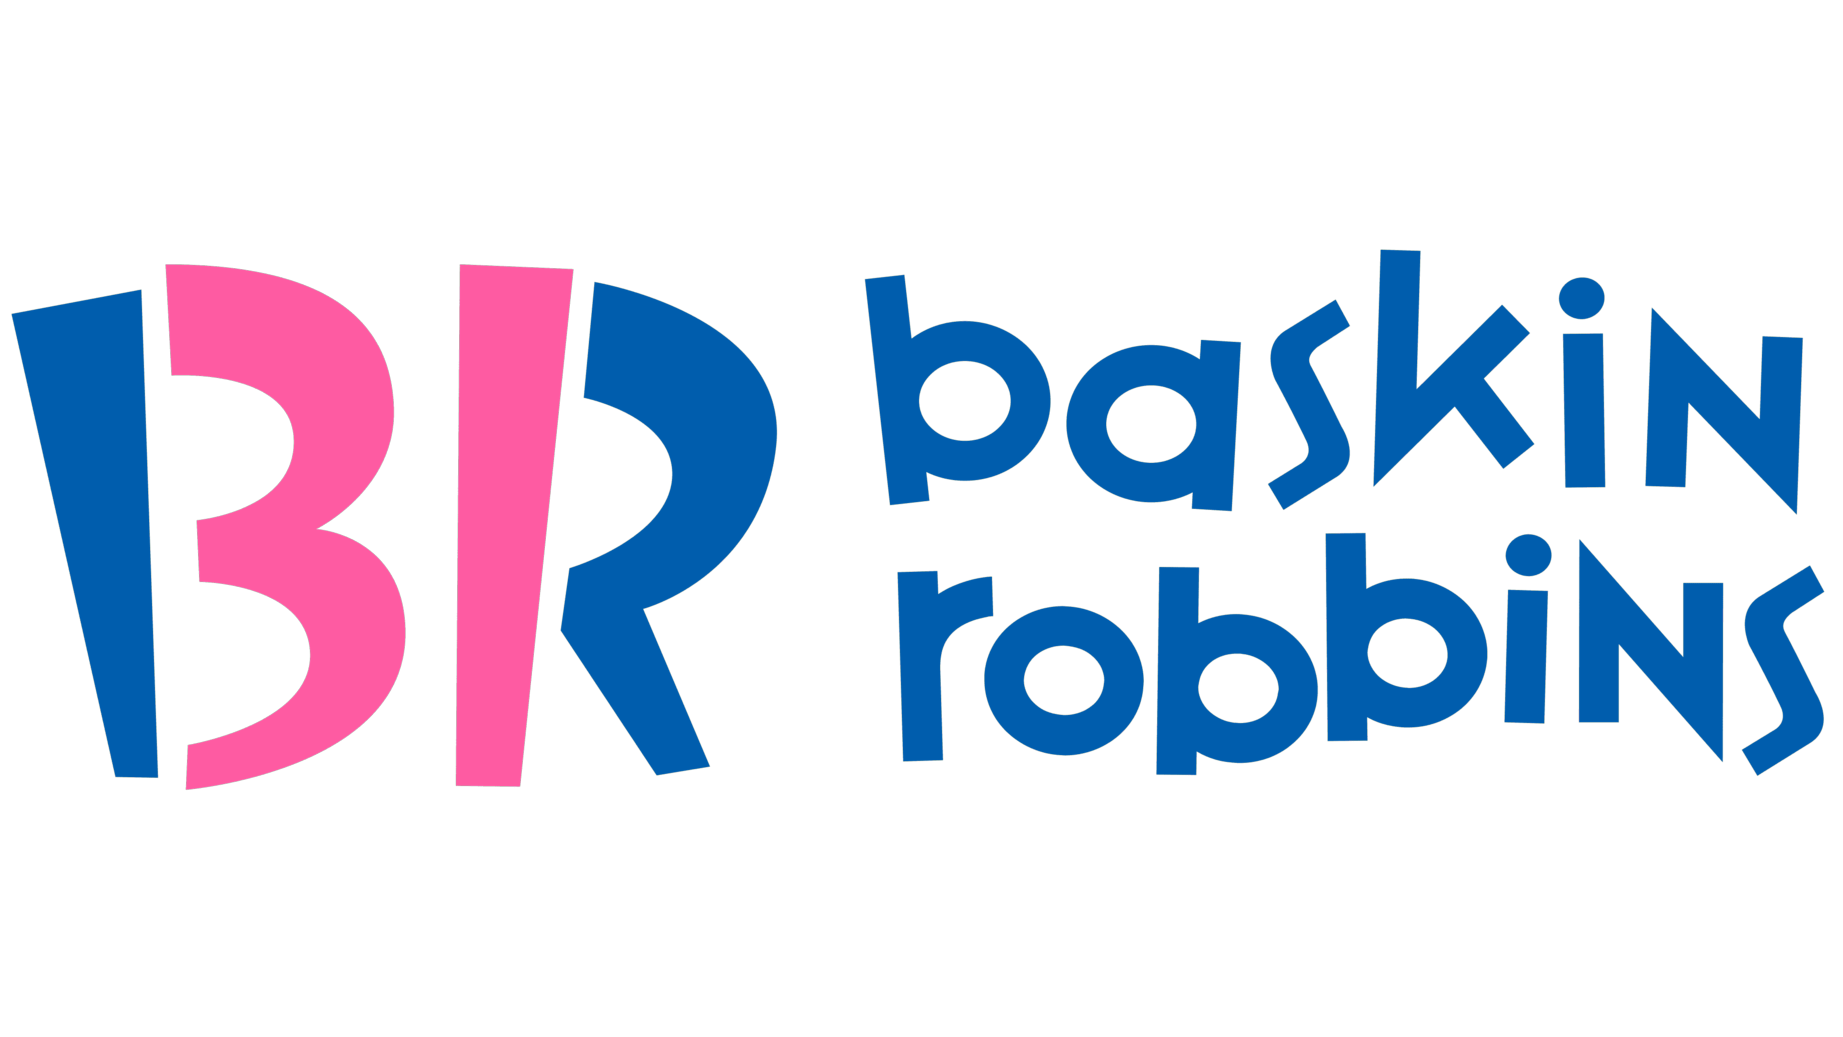 Baskin robbins symbol